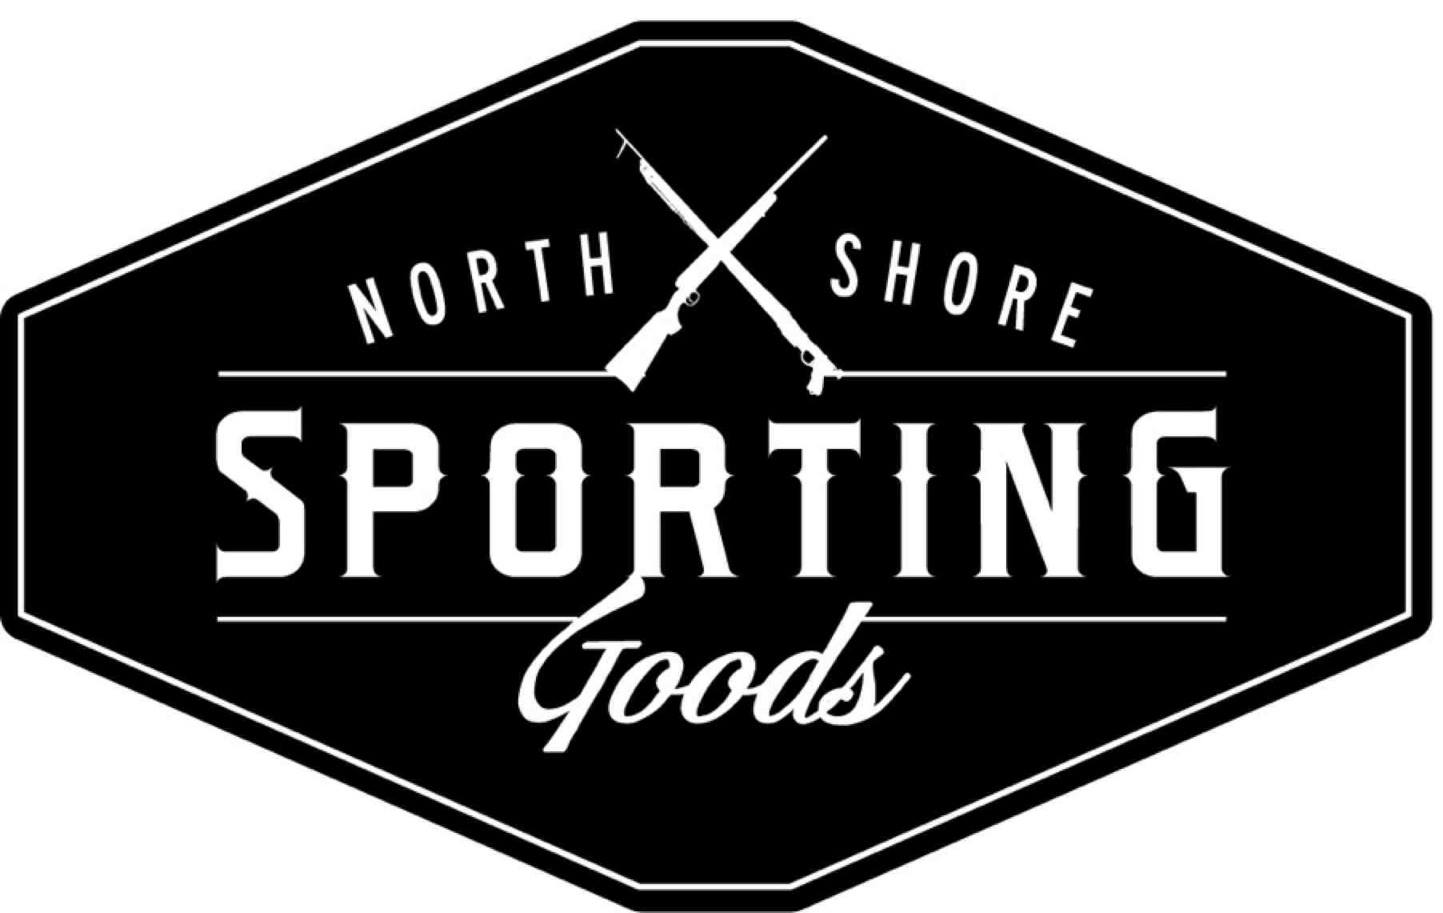 North Shore Sporting Goods: Waialua and Haleiwa Fishing Supply Store